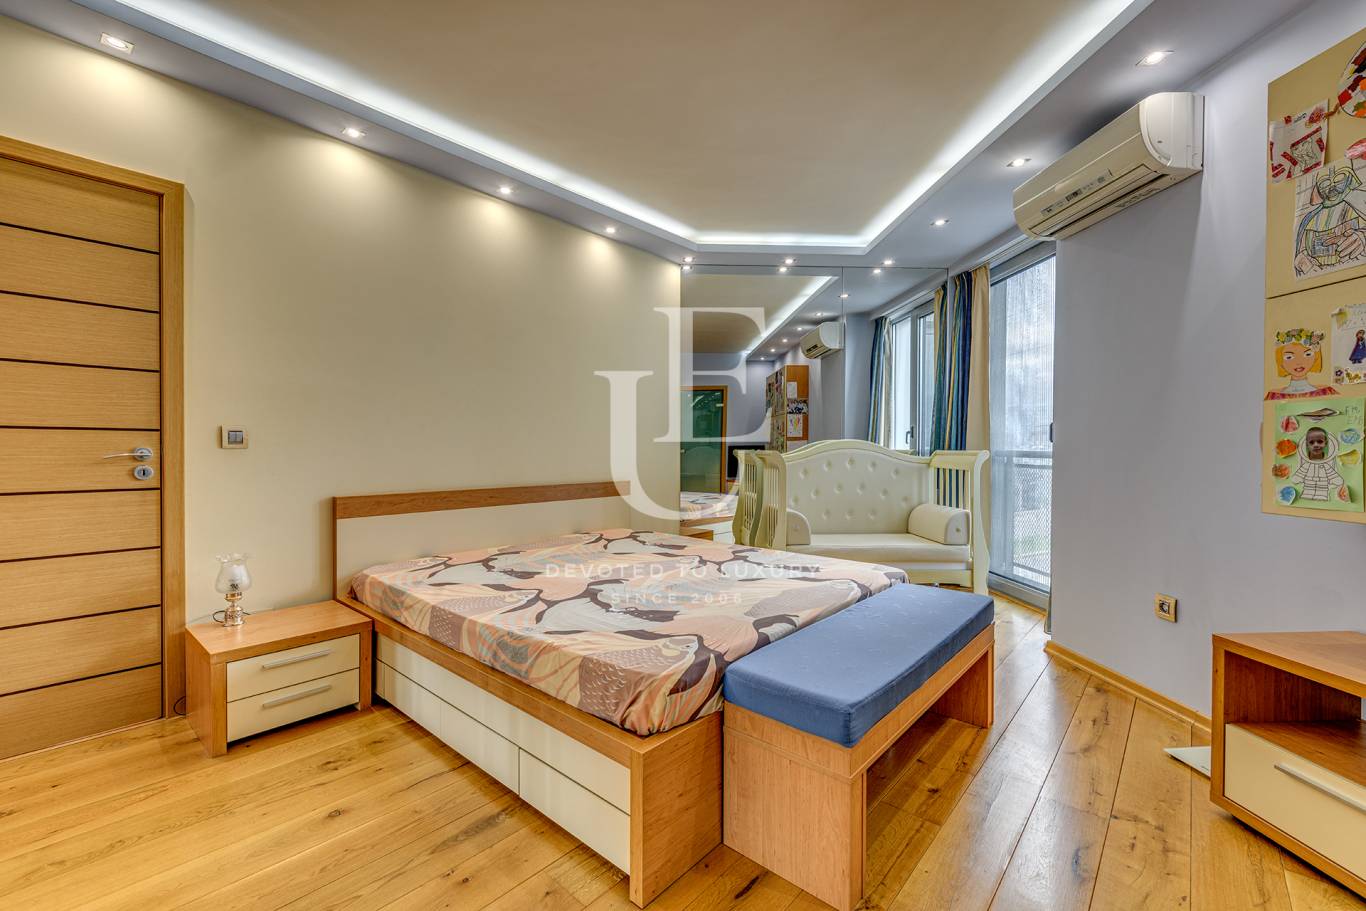 Apartment for sale in Sofia, Manastirski livadi - West with listing ID: K1489 - image 8